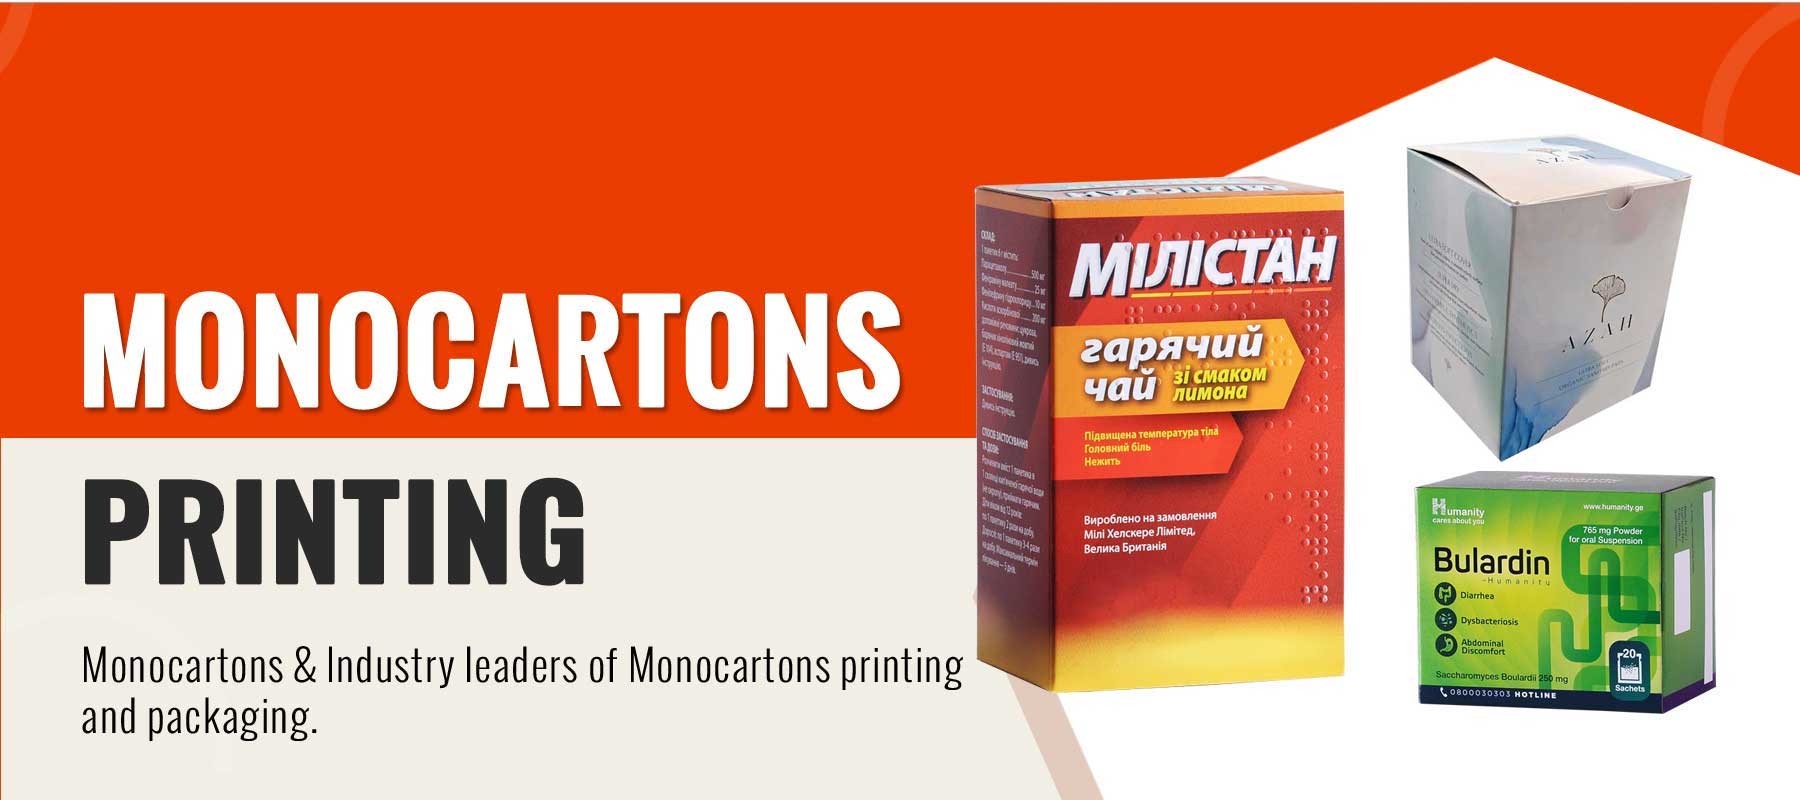 Monocartons Printing